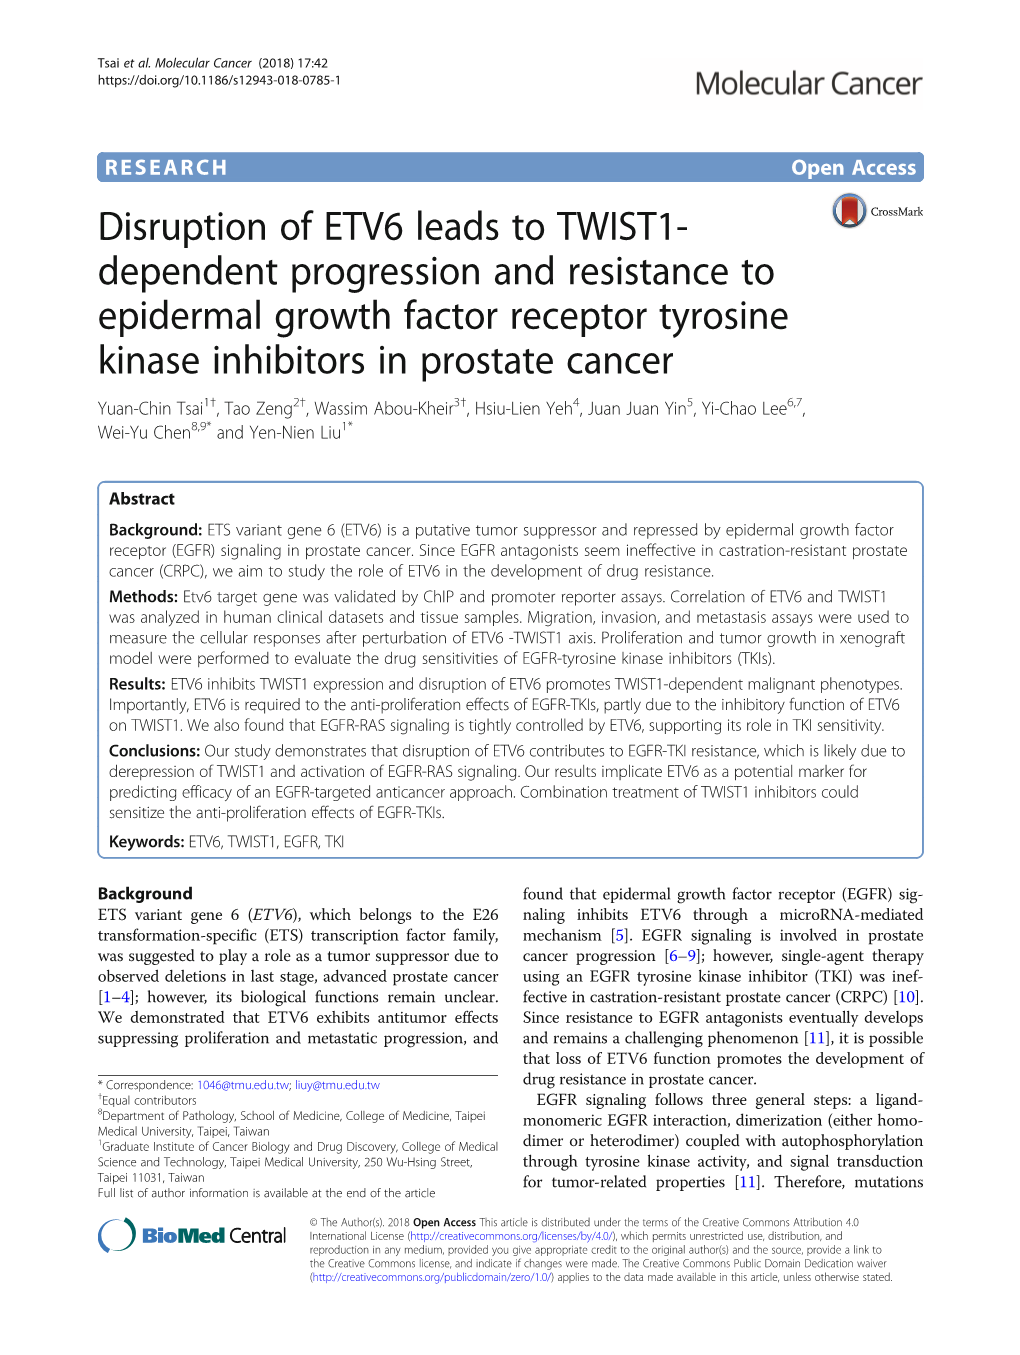 Disruption of ETV6 Leads to TWIST1-Dependent Progression